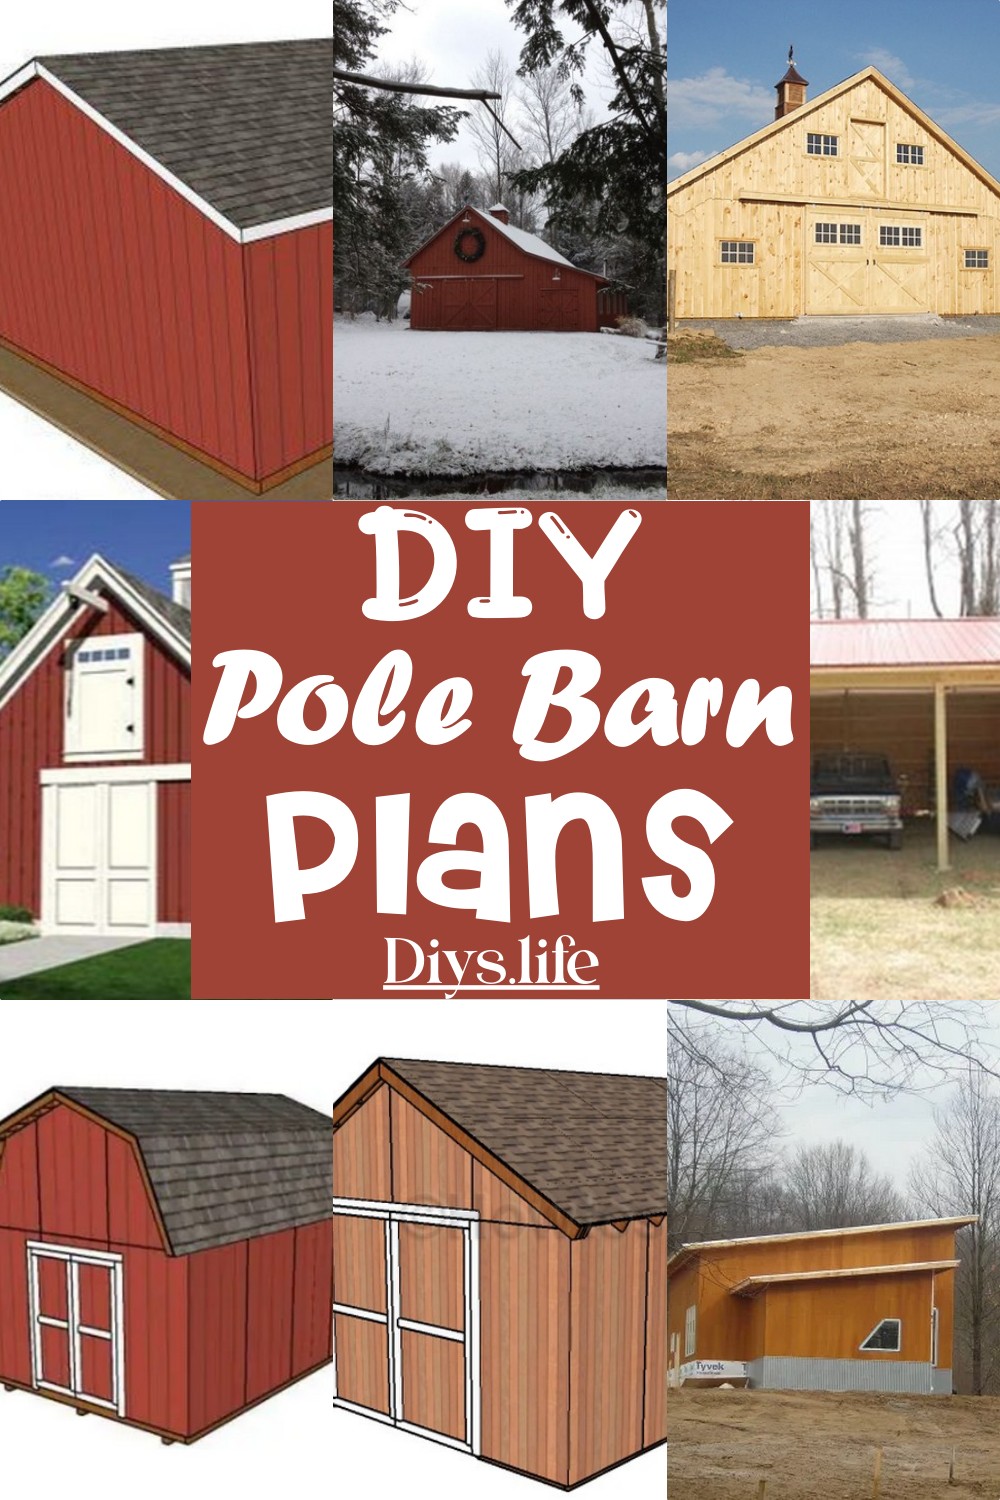 DIY Pole Barn Plans